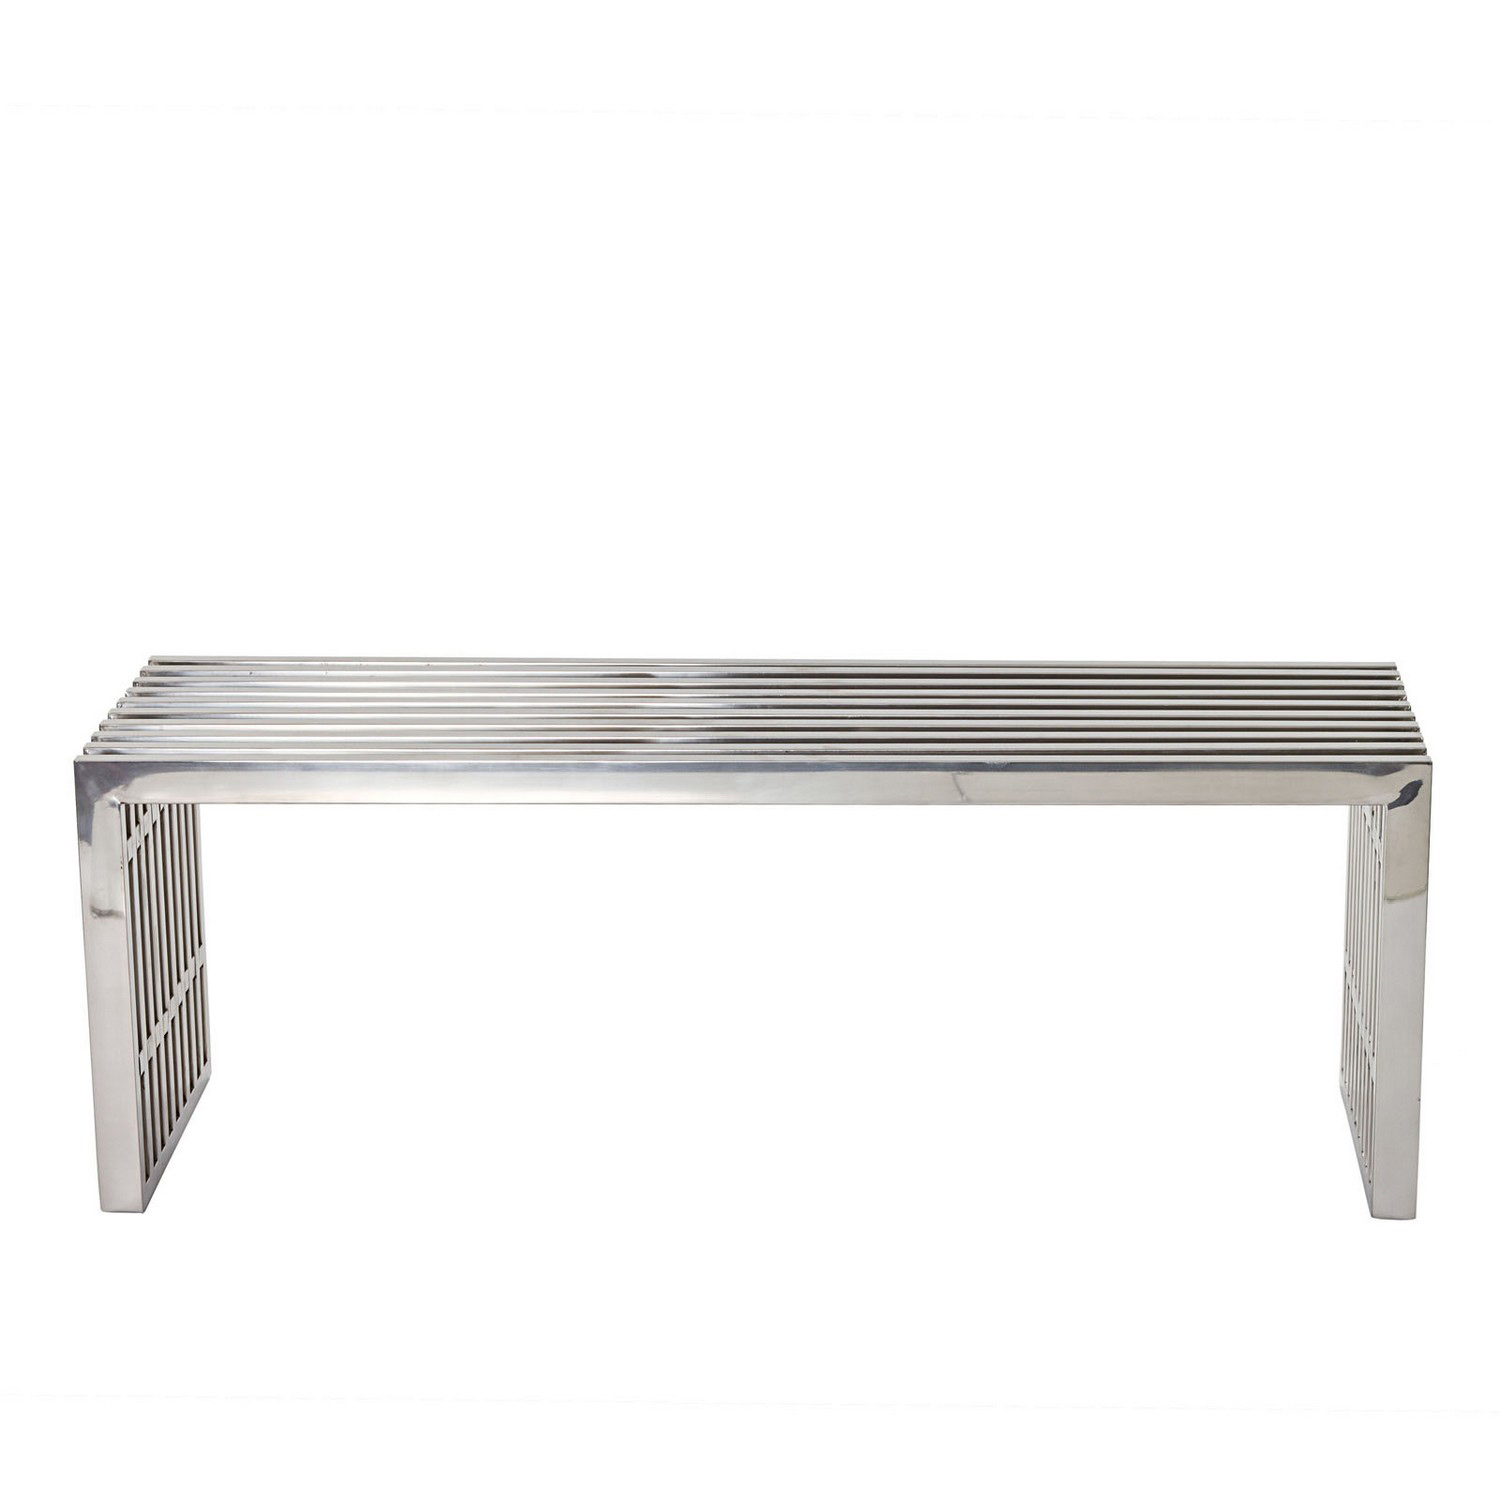 Modway Gridiron Medium Bench - Silver